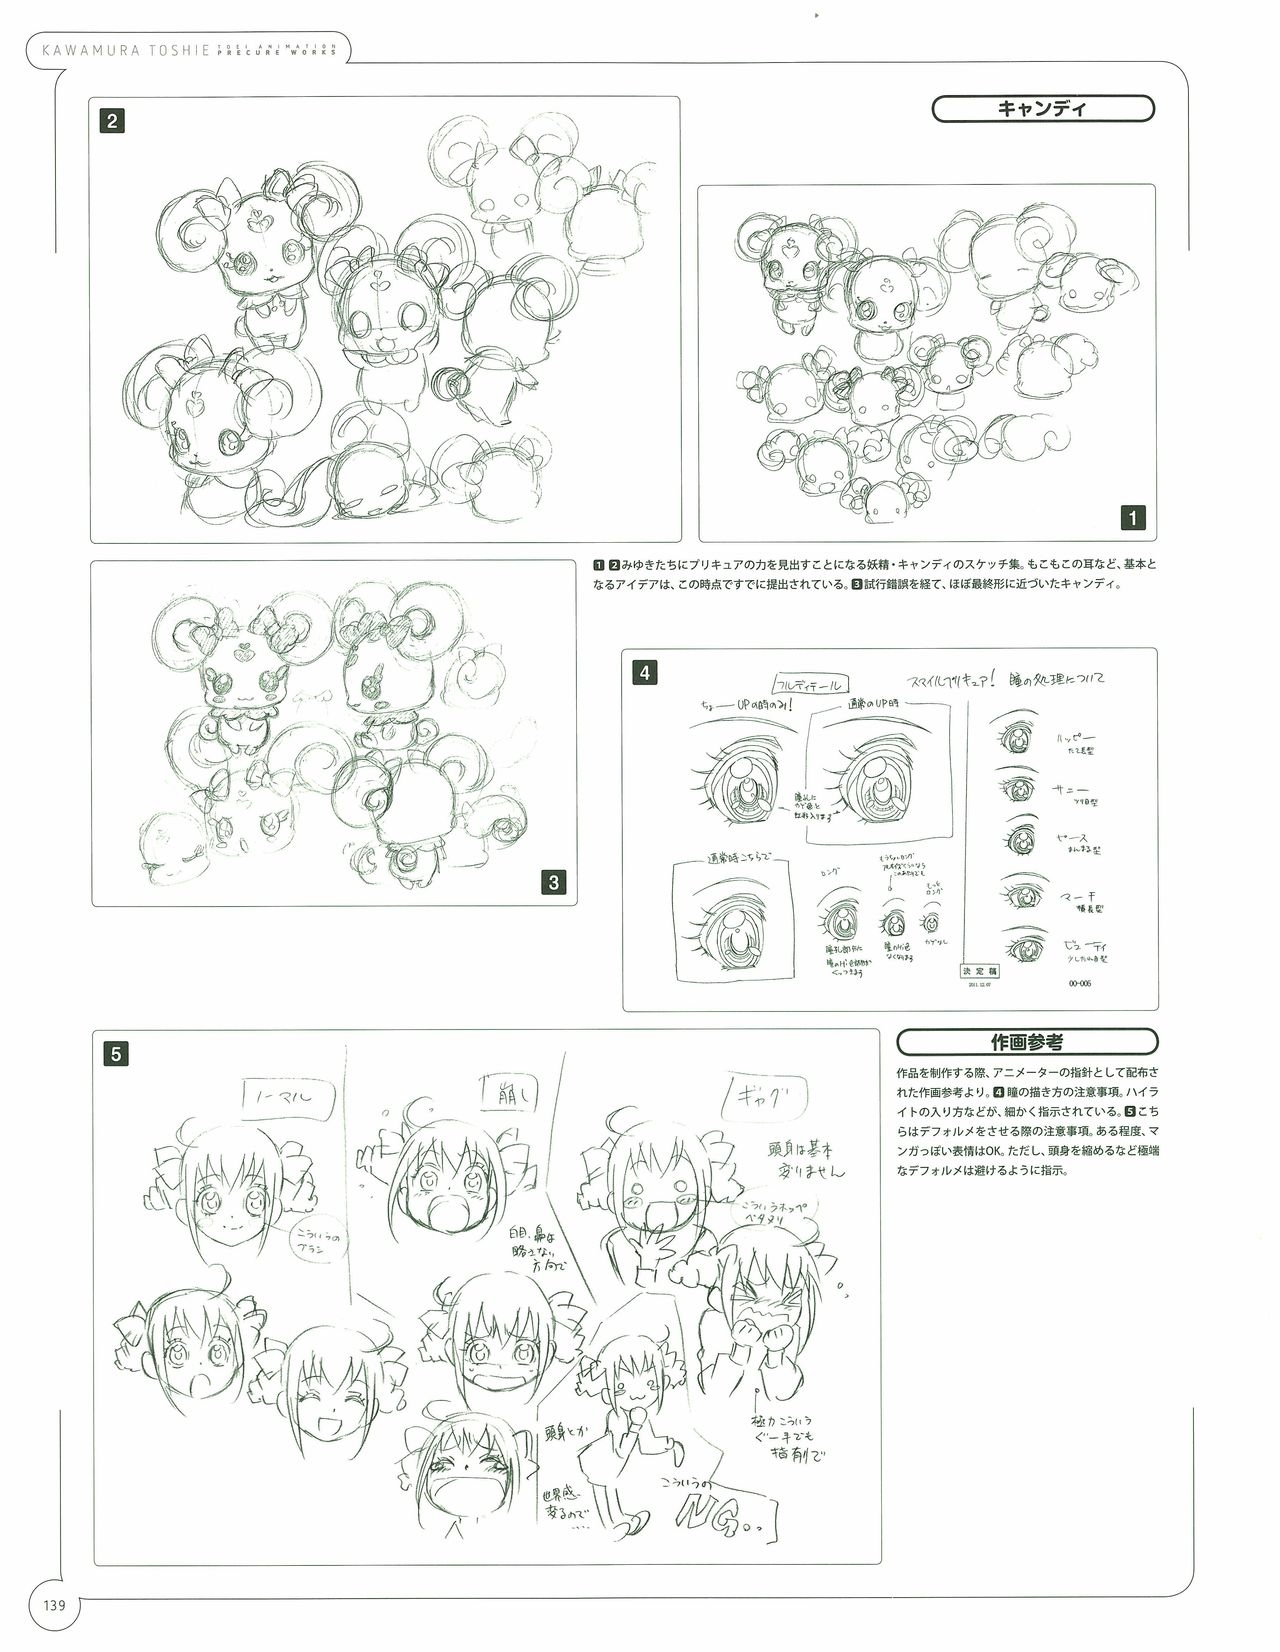 Kawamura Toshie - Toei Animation Precure Works 139